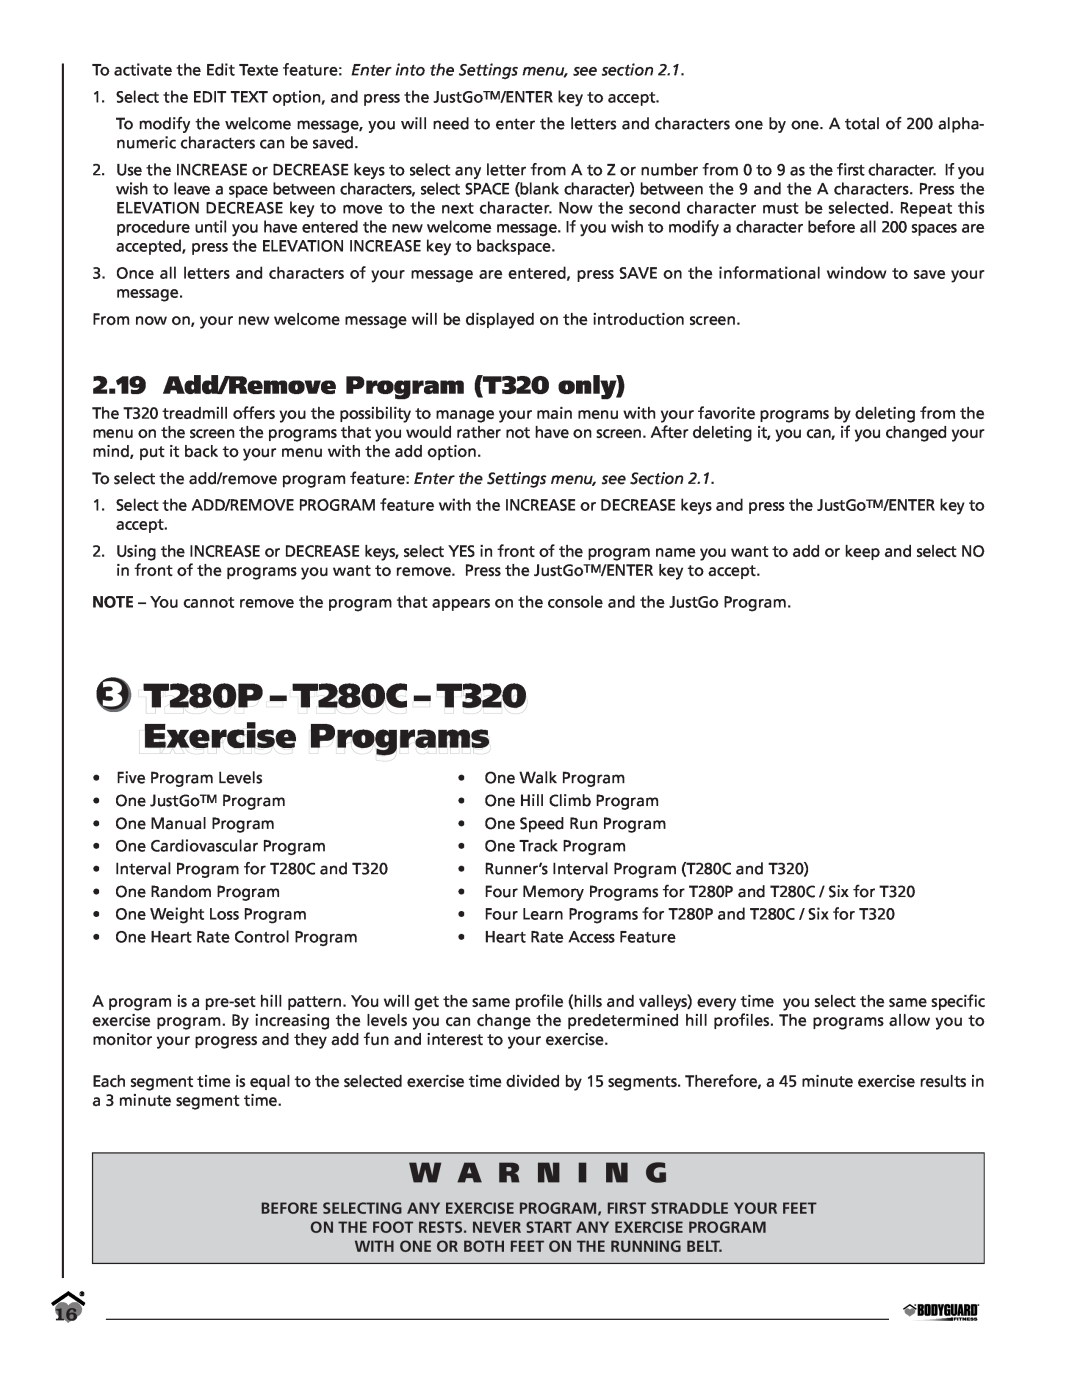 Bodyguard LT280P 3 T280PT280P--T280C - T320 ExercisExercise Programs, 2.19 Add/Remove Program T320 only, W A R N I N G 